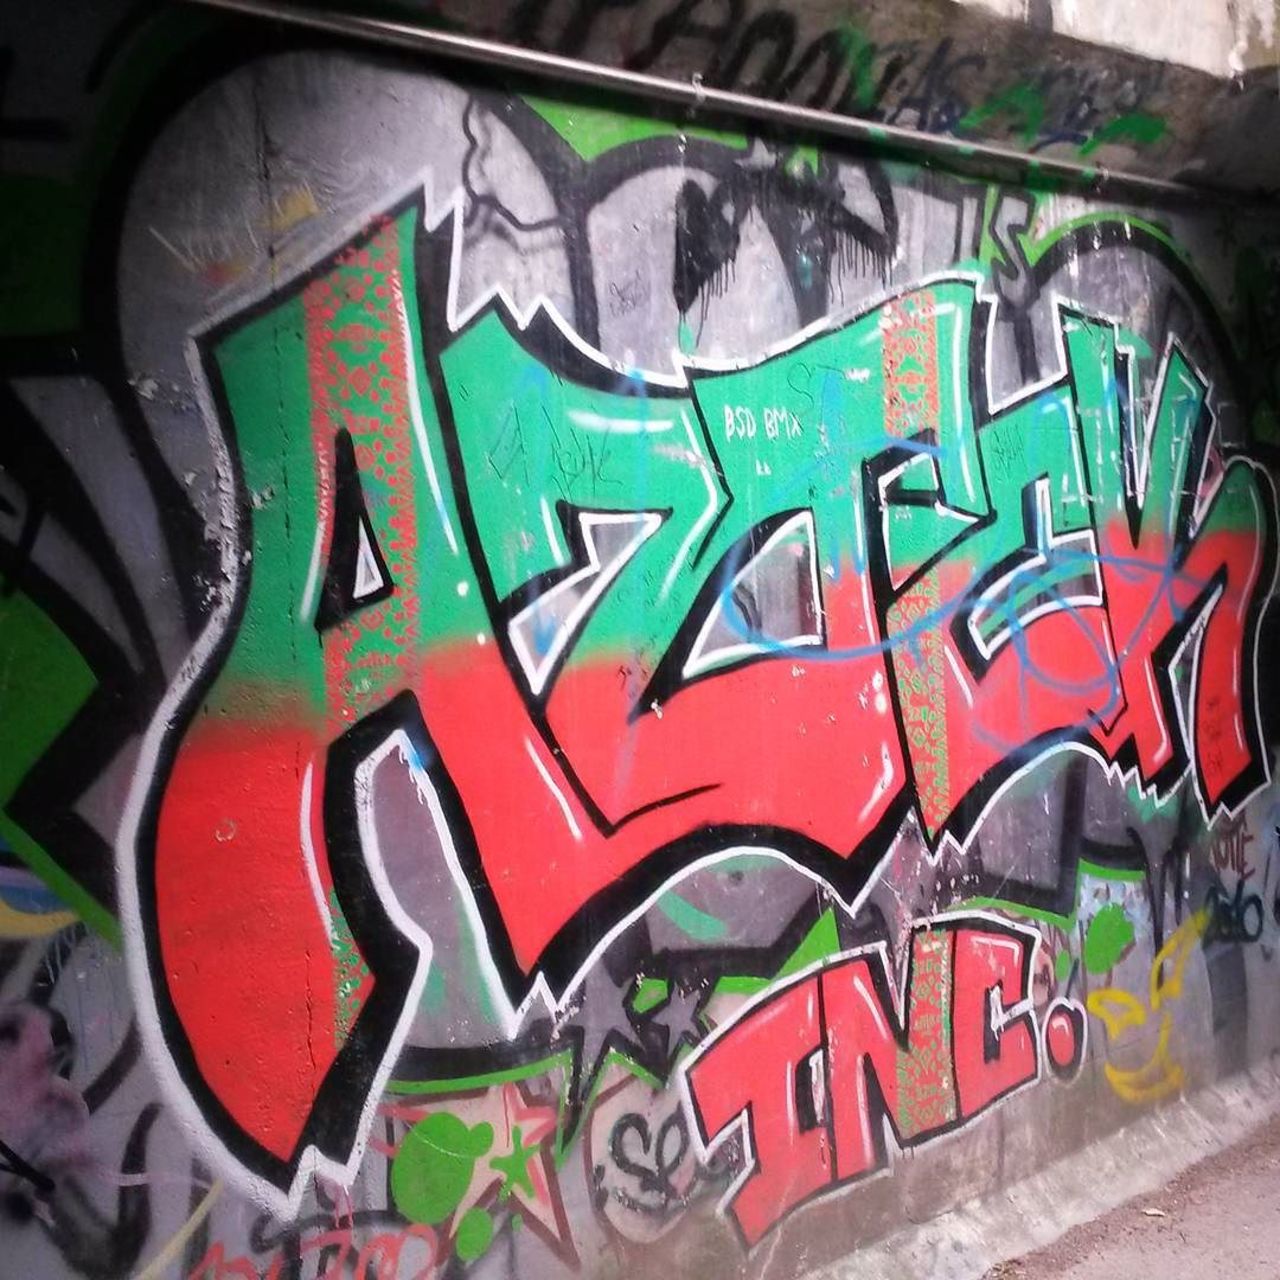 #Paris #graffiti photo by @le_cyclopede http://ift.tt/1RmrFUy #StreetArt https://t.co/vfTTEg6kxr